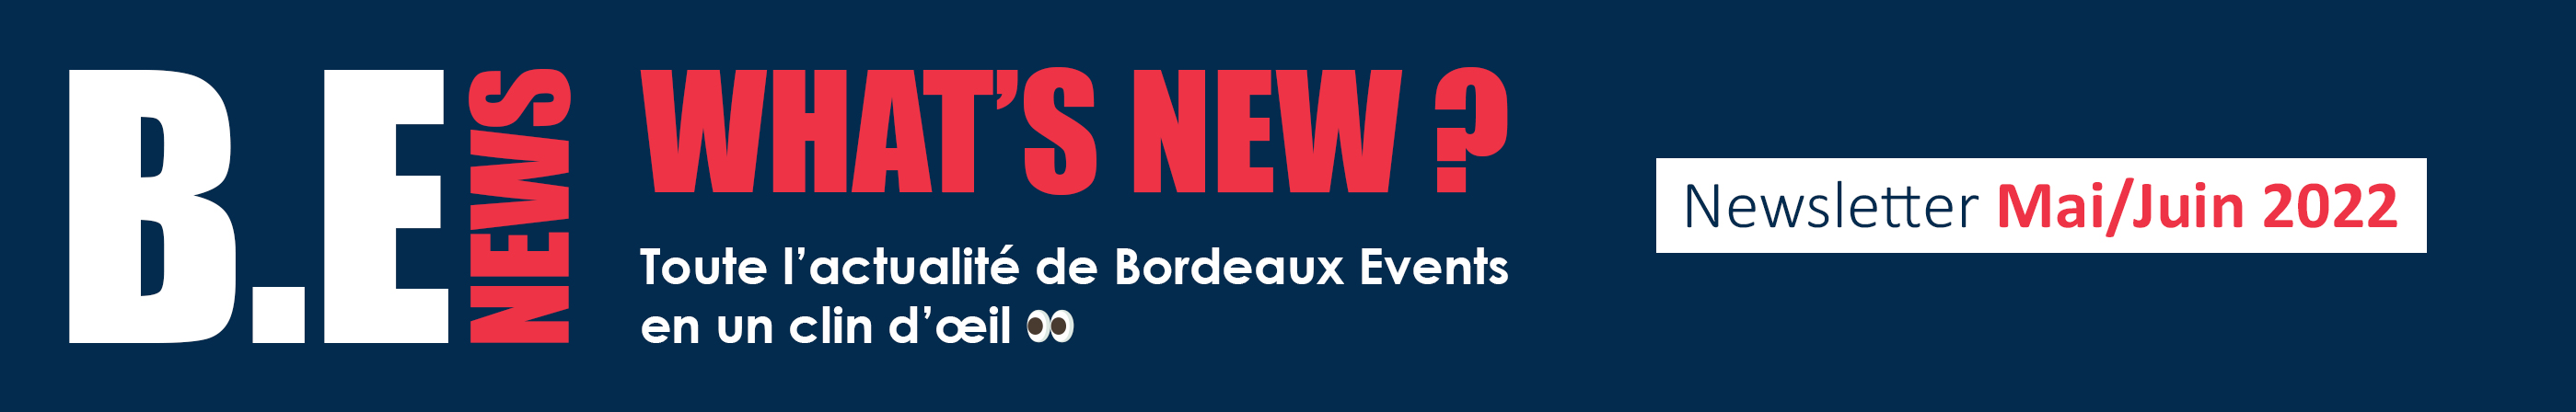 Header Bordeaux Events - News Avril 2022